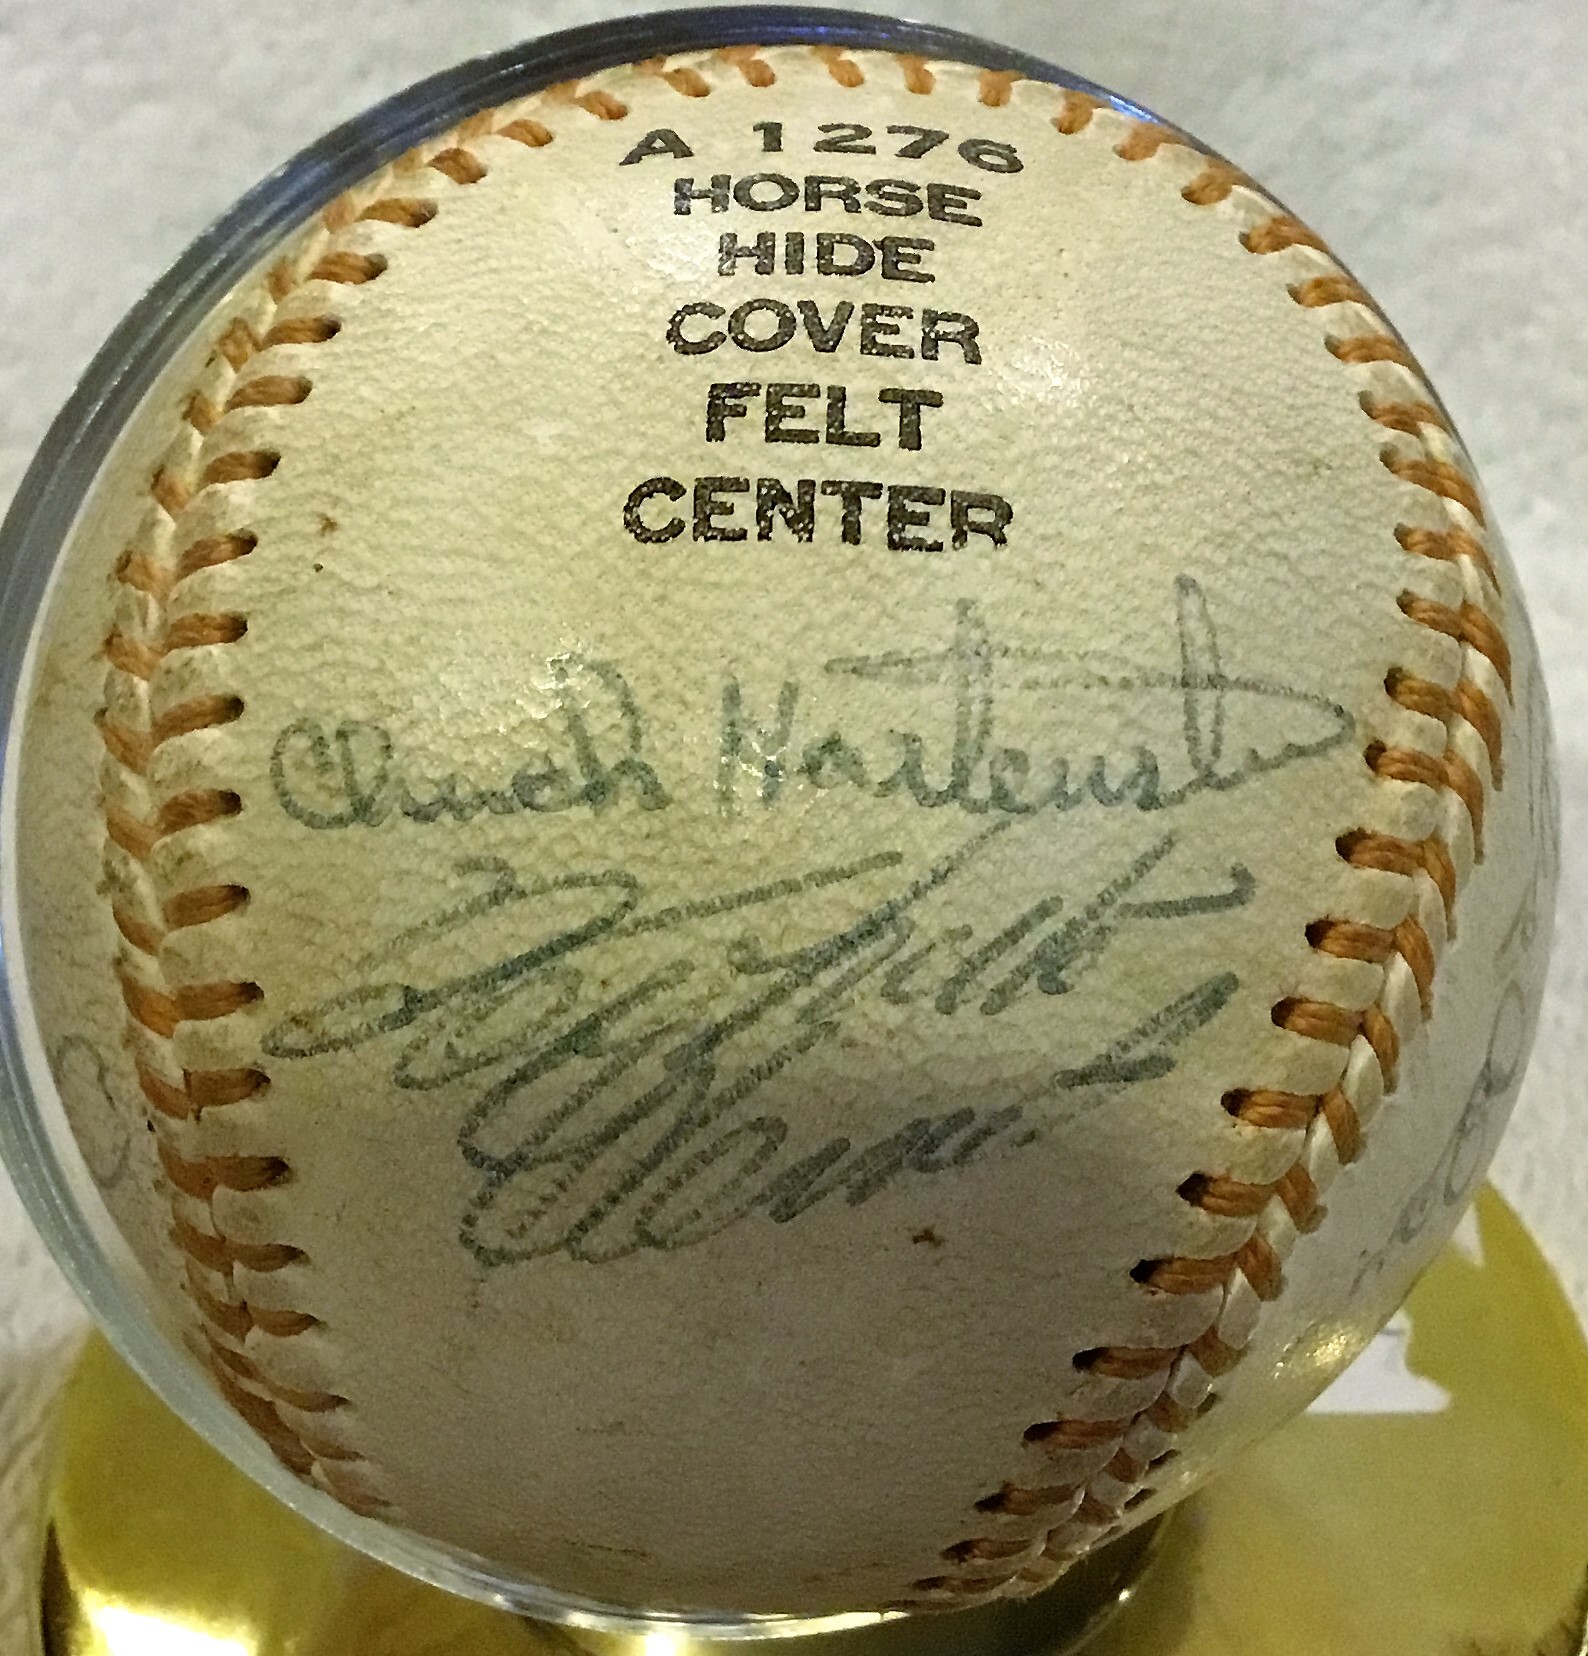 Lot Detail 1969 Pittsburgh Pirates Signed Baseball Wclemente And Jsa Loa